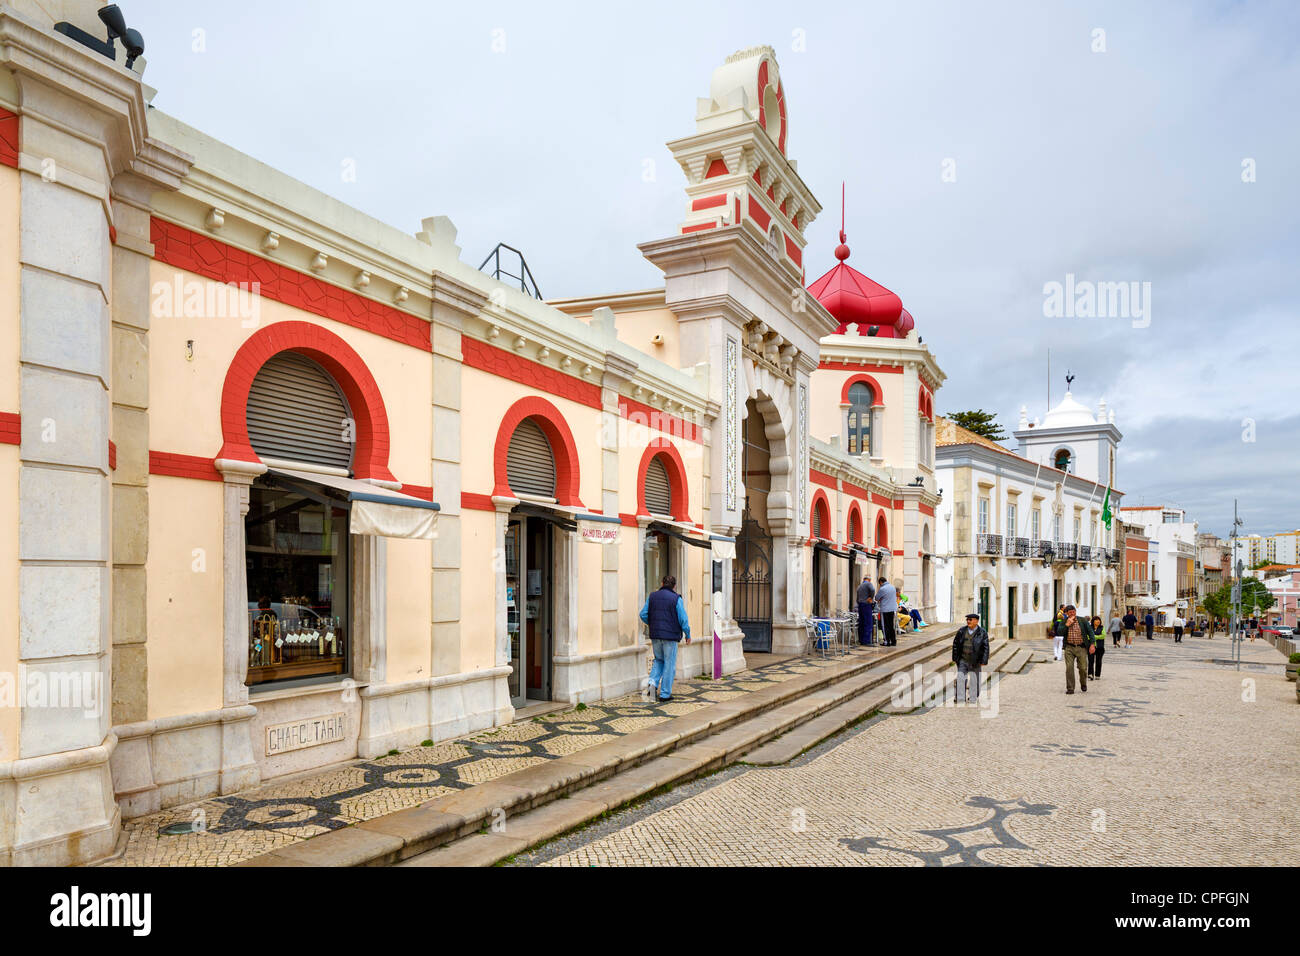 Covered market in the town centre, Rua Jose Fernandes Guerreiro, Loule, Algarve, Portugal Stock Photo